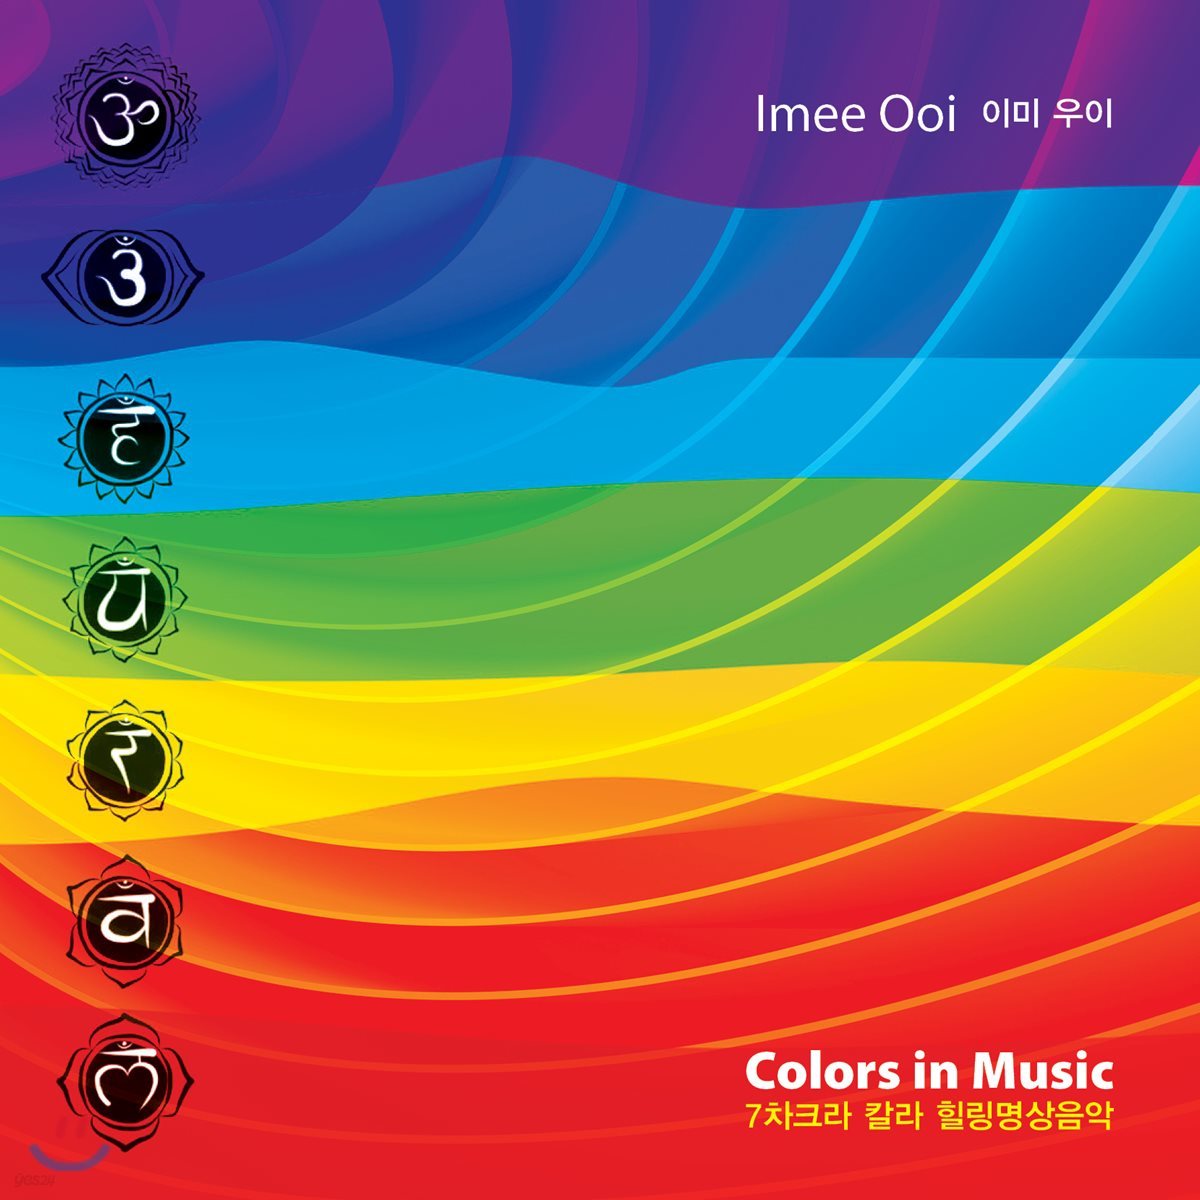 Imee Ooi (이미 우이) - 7 차크라 칼라 힐링명상음악 (Colors In Music)